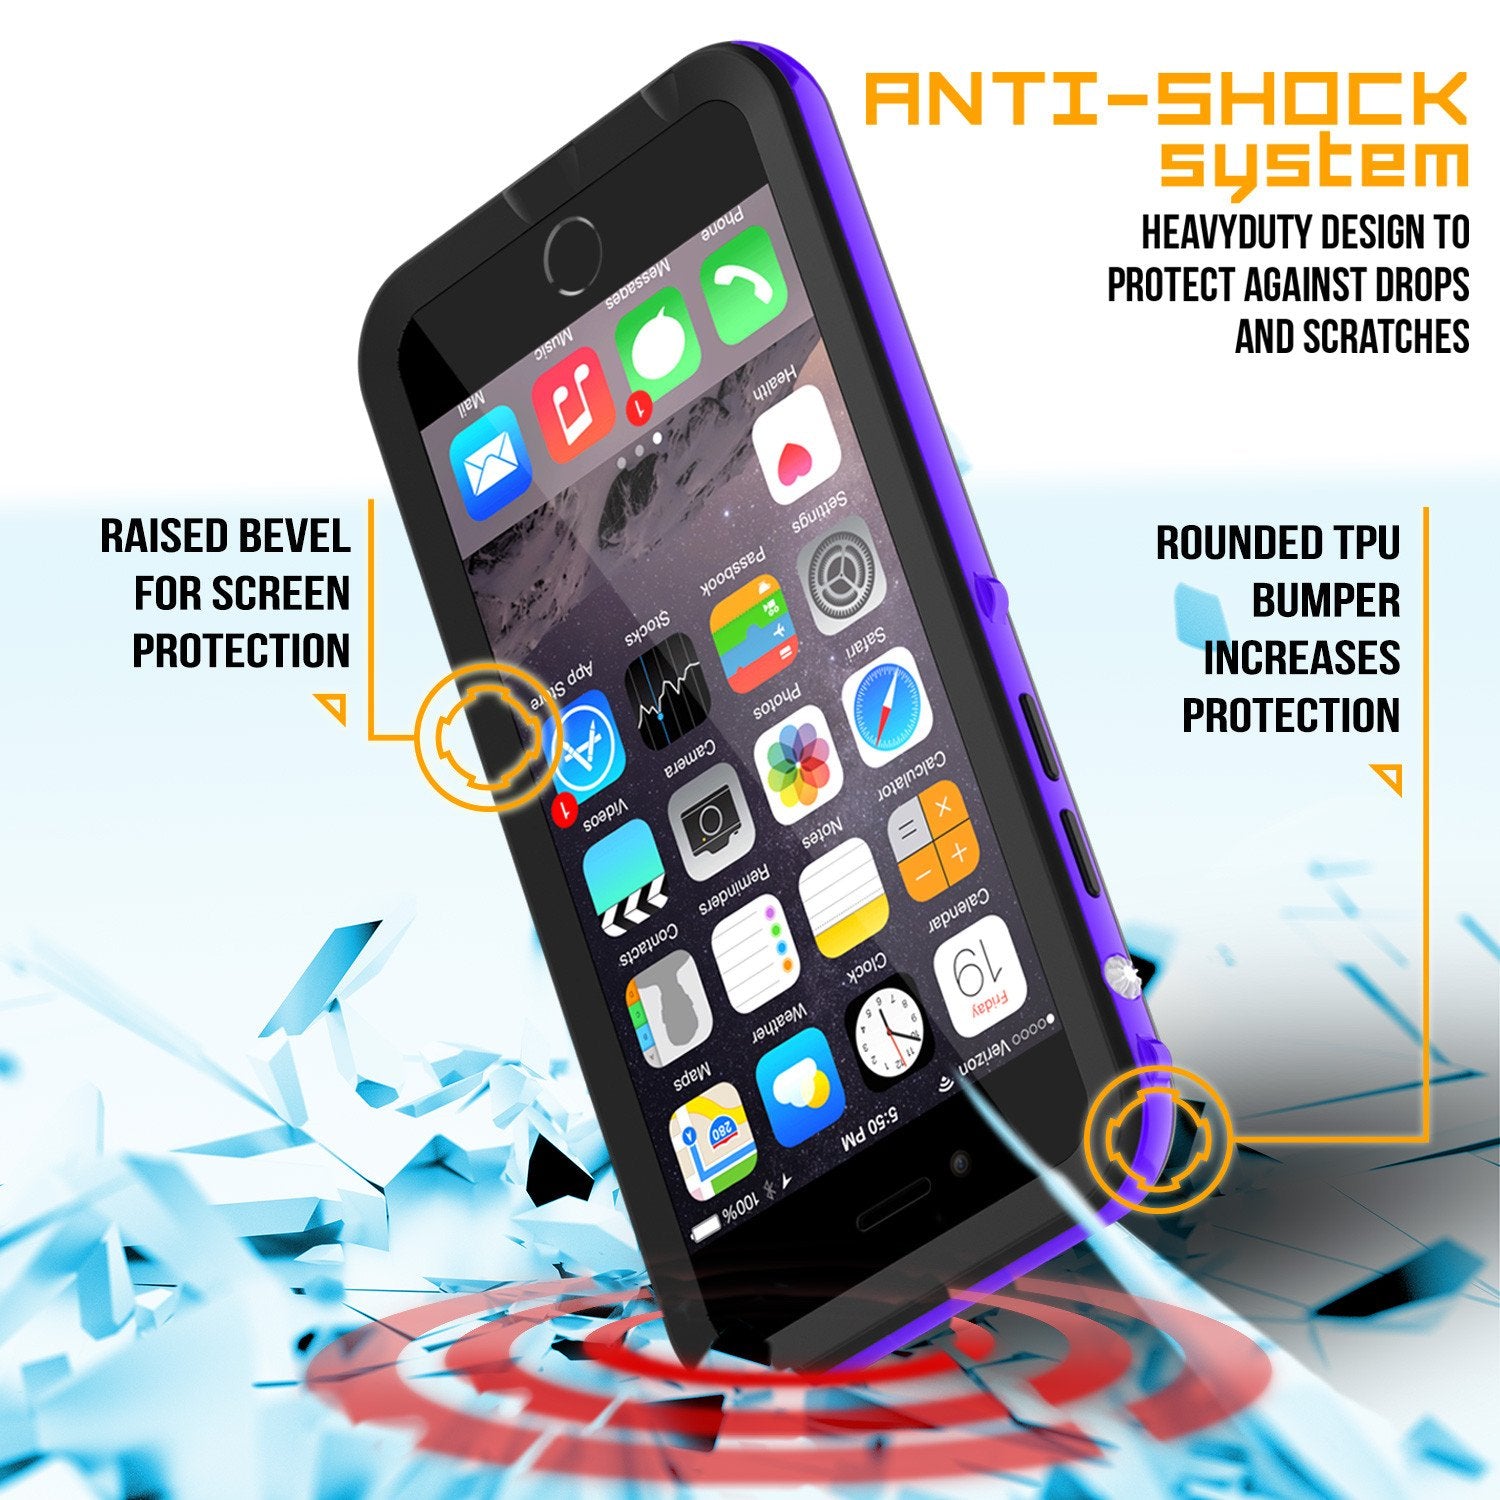 Apple iPhone 7 Waterproof Case, PUNKcase CRYSTAL 2.0 Purple W/ Attached Screen Protector  | Warranty